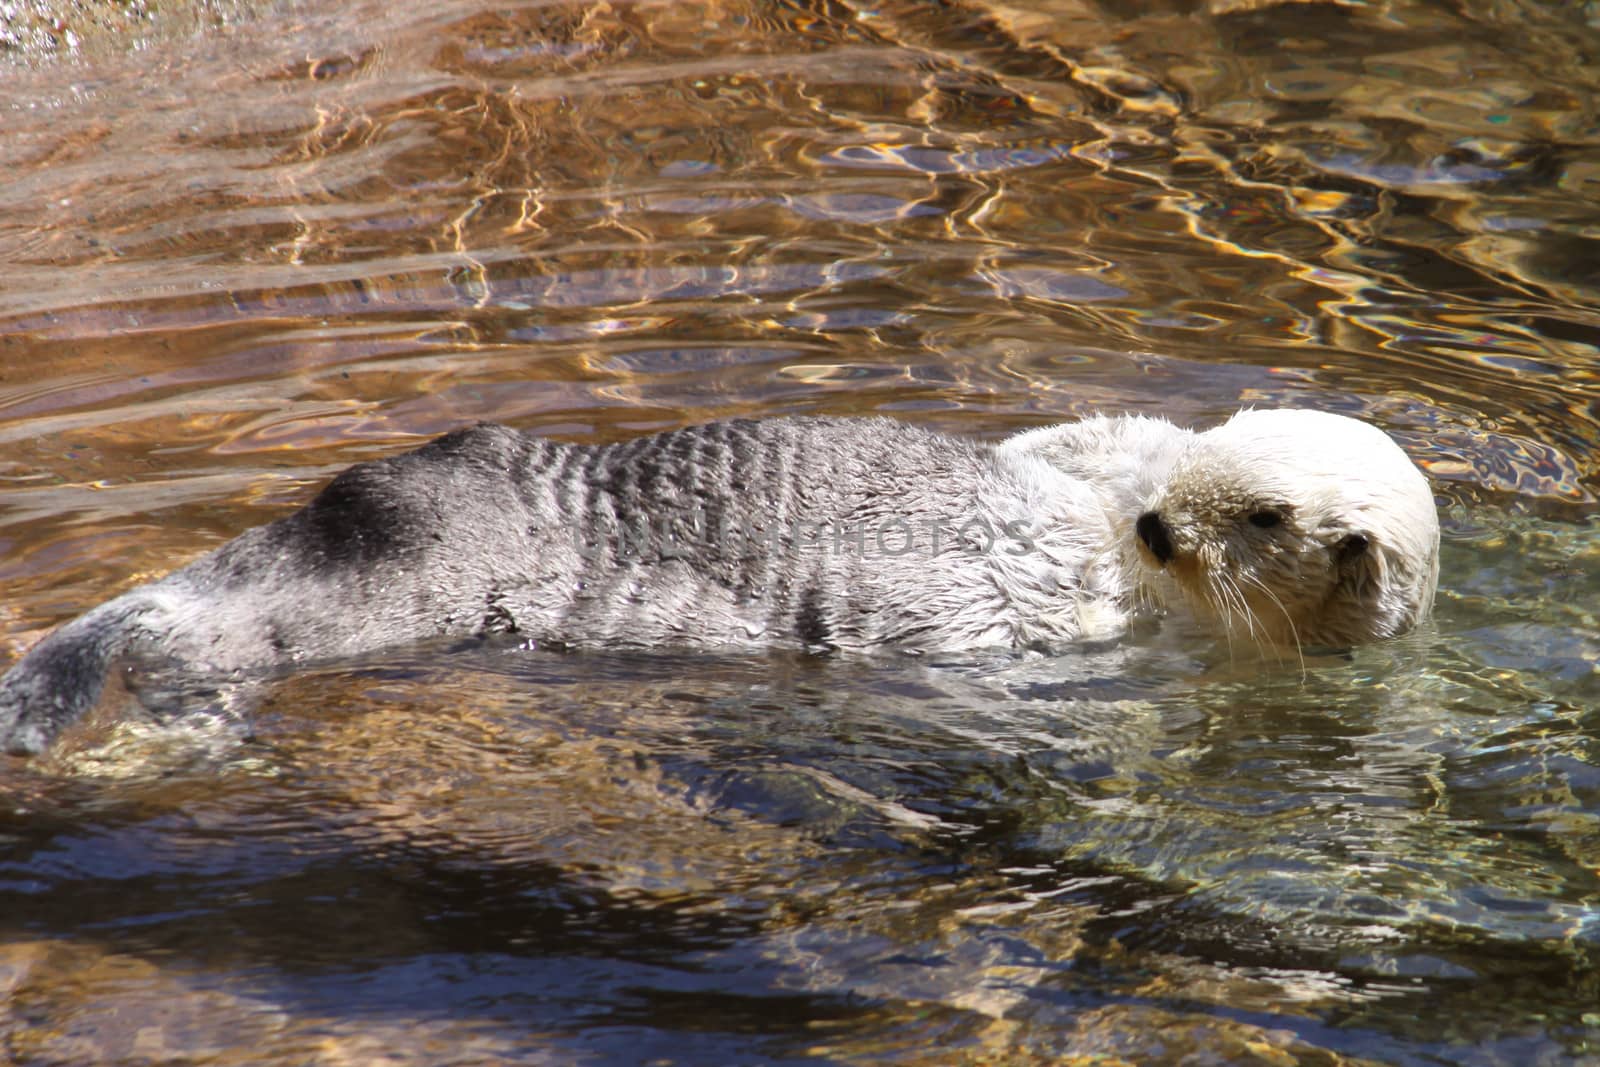 Otter taking a swim.